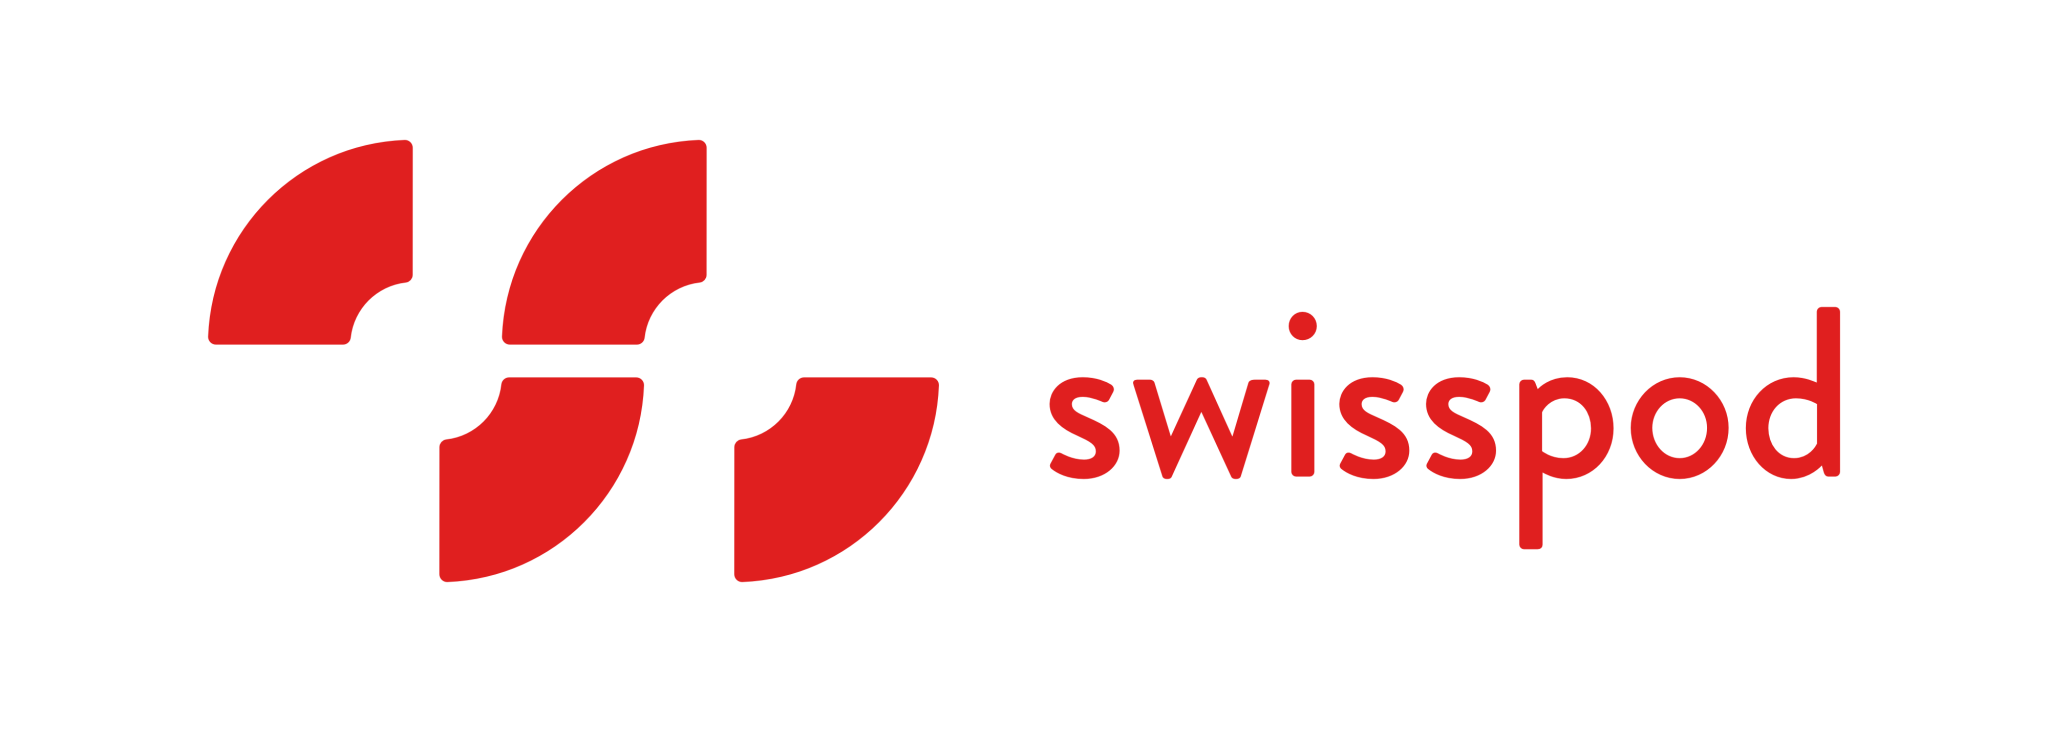 swisspod-1-2048x2048-2021-startup